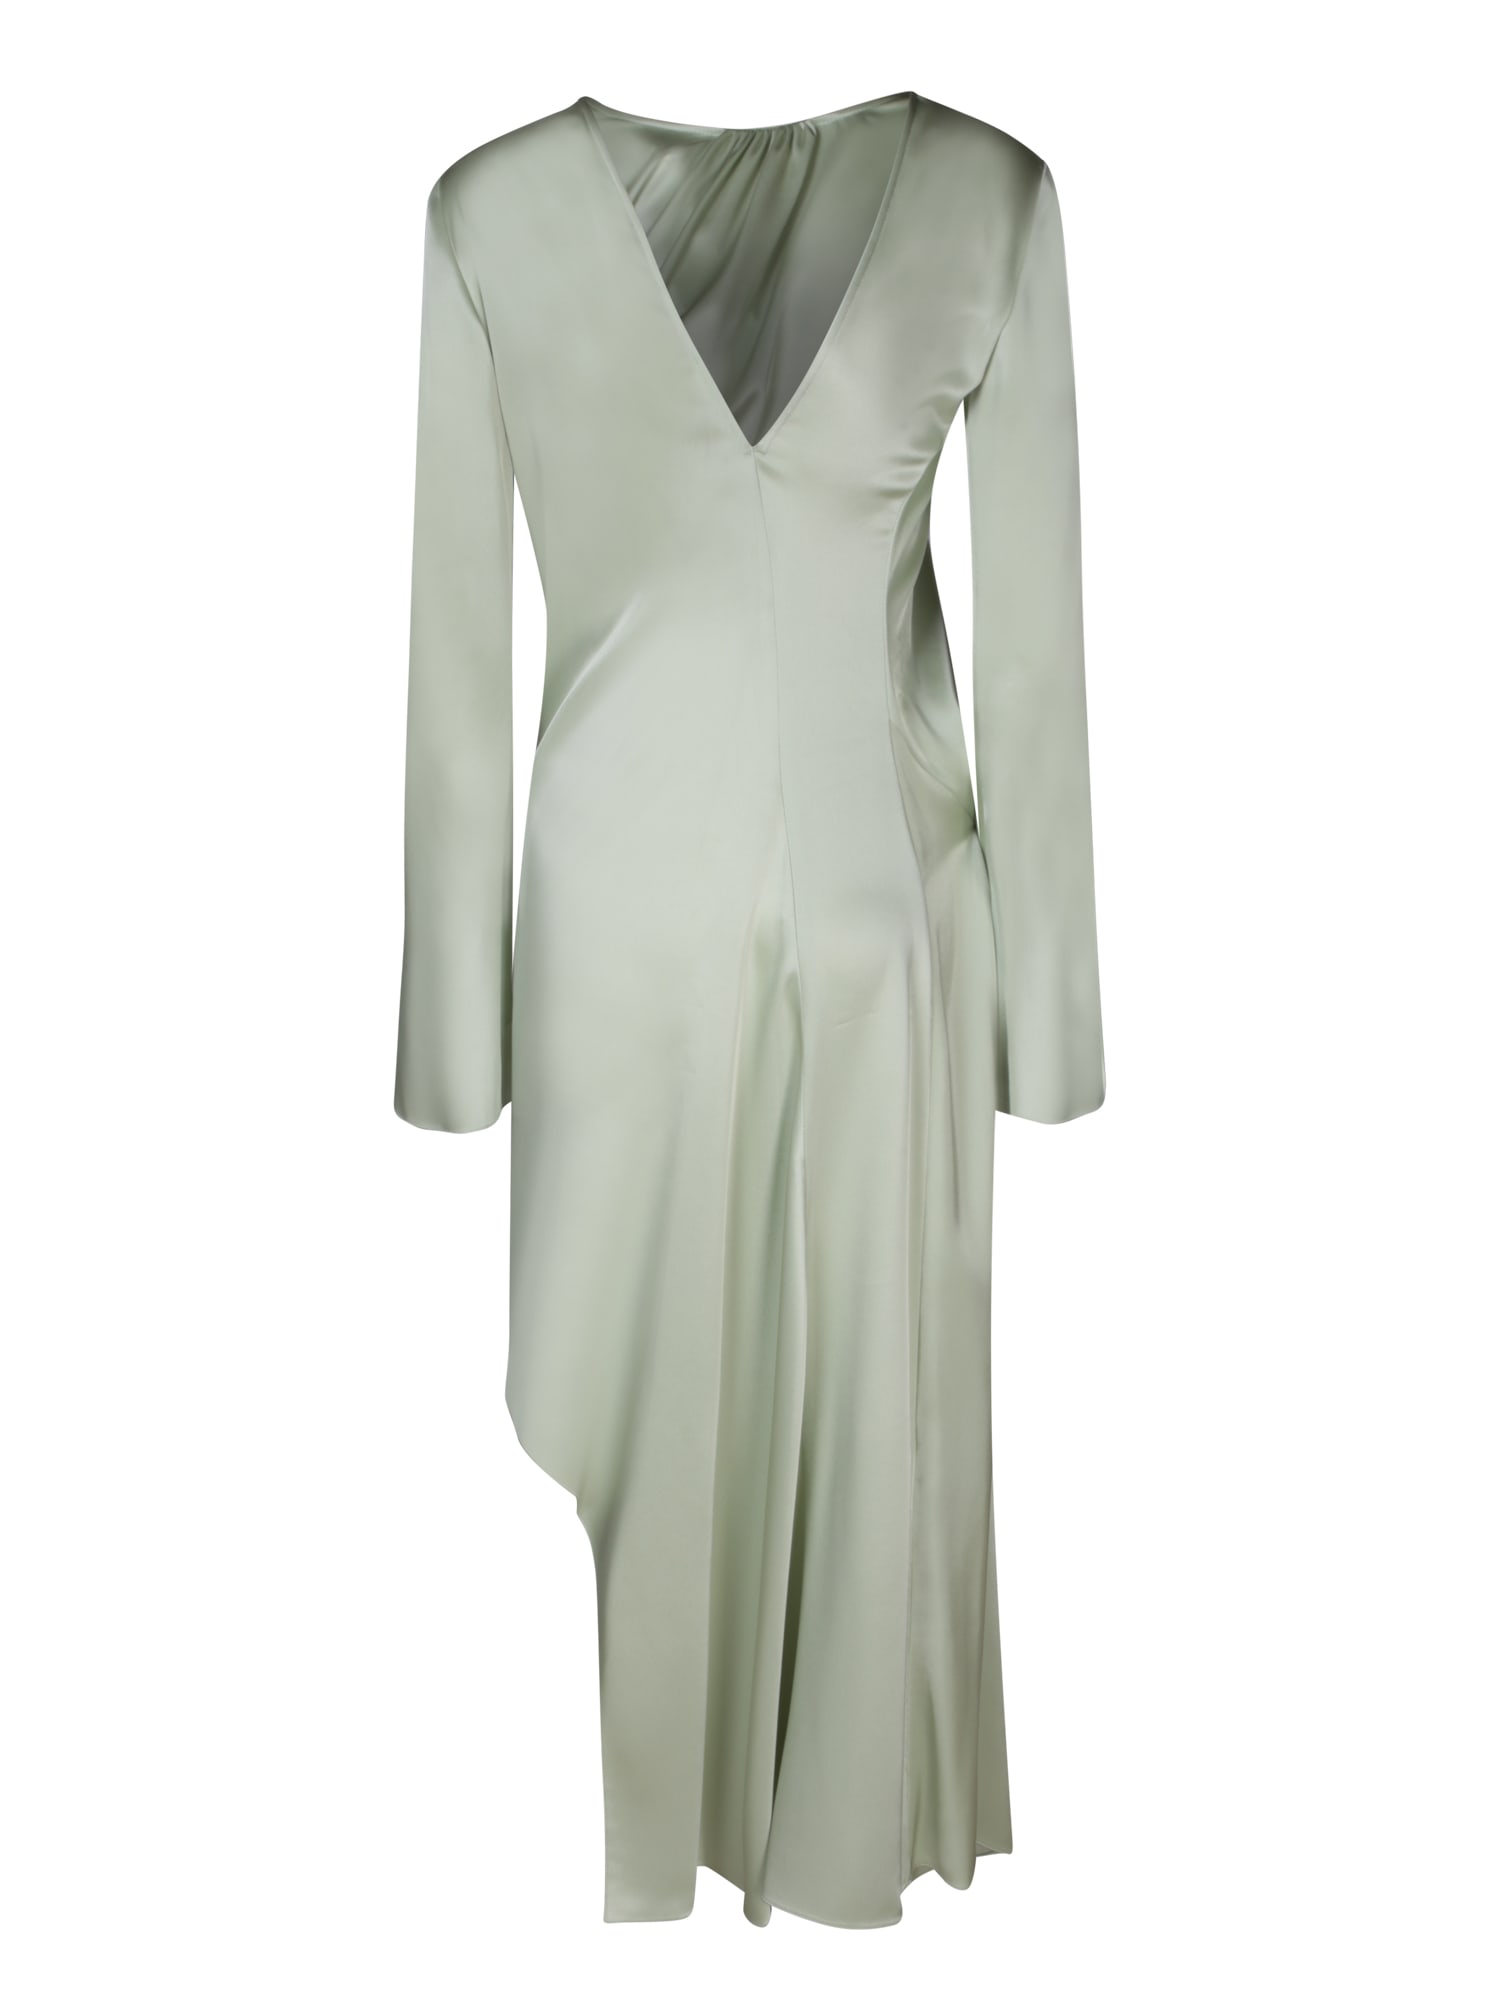 Shop Jw Anderson Asymmetric Mint Green Dress